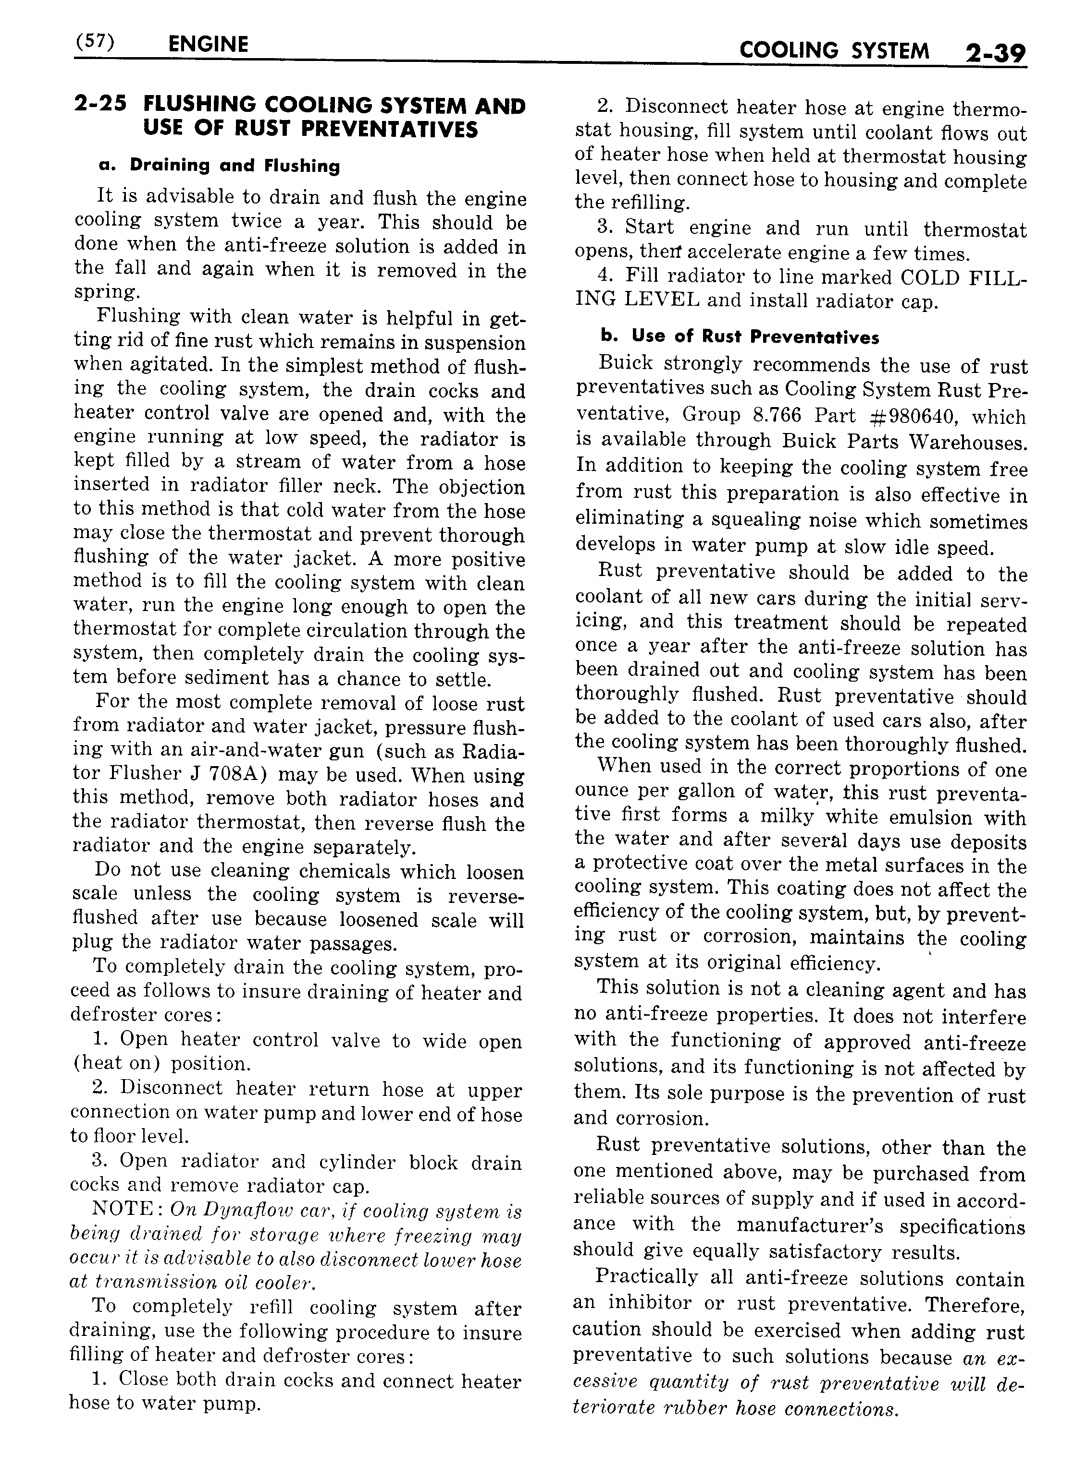 n_03 1951 Buick Shop Manual - Engine-039-039.jpg